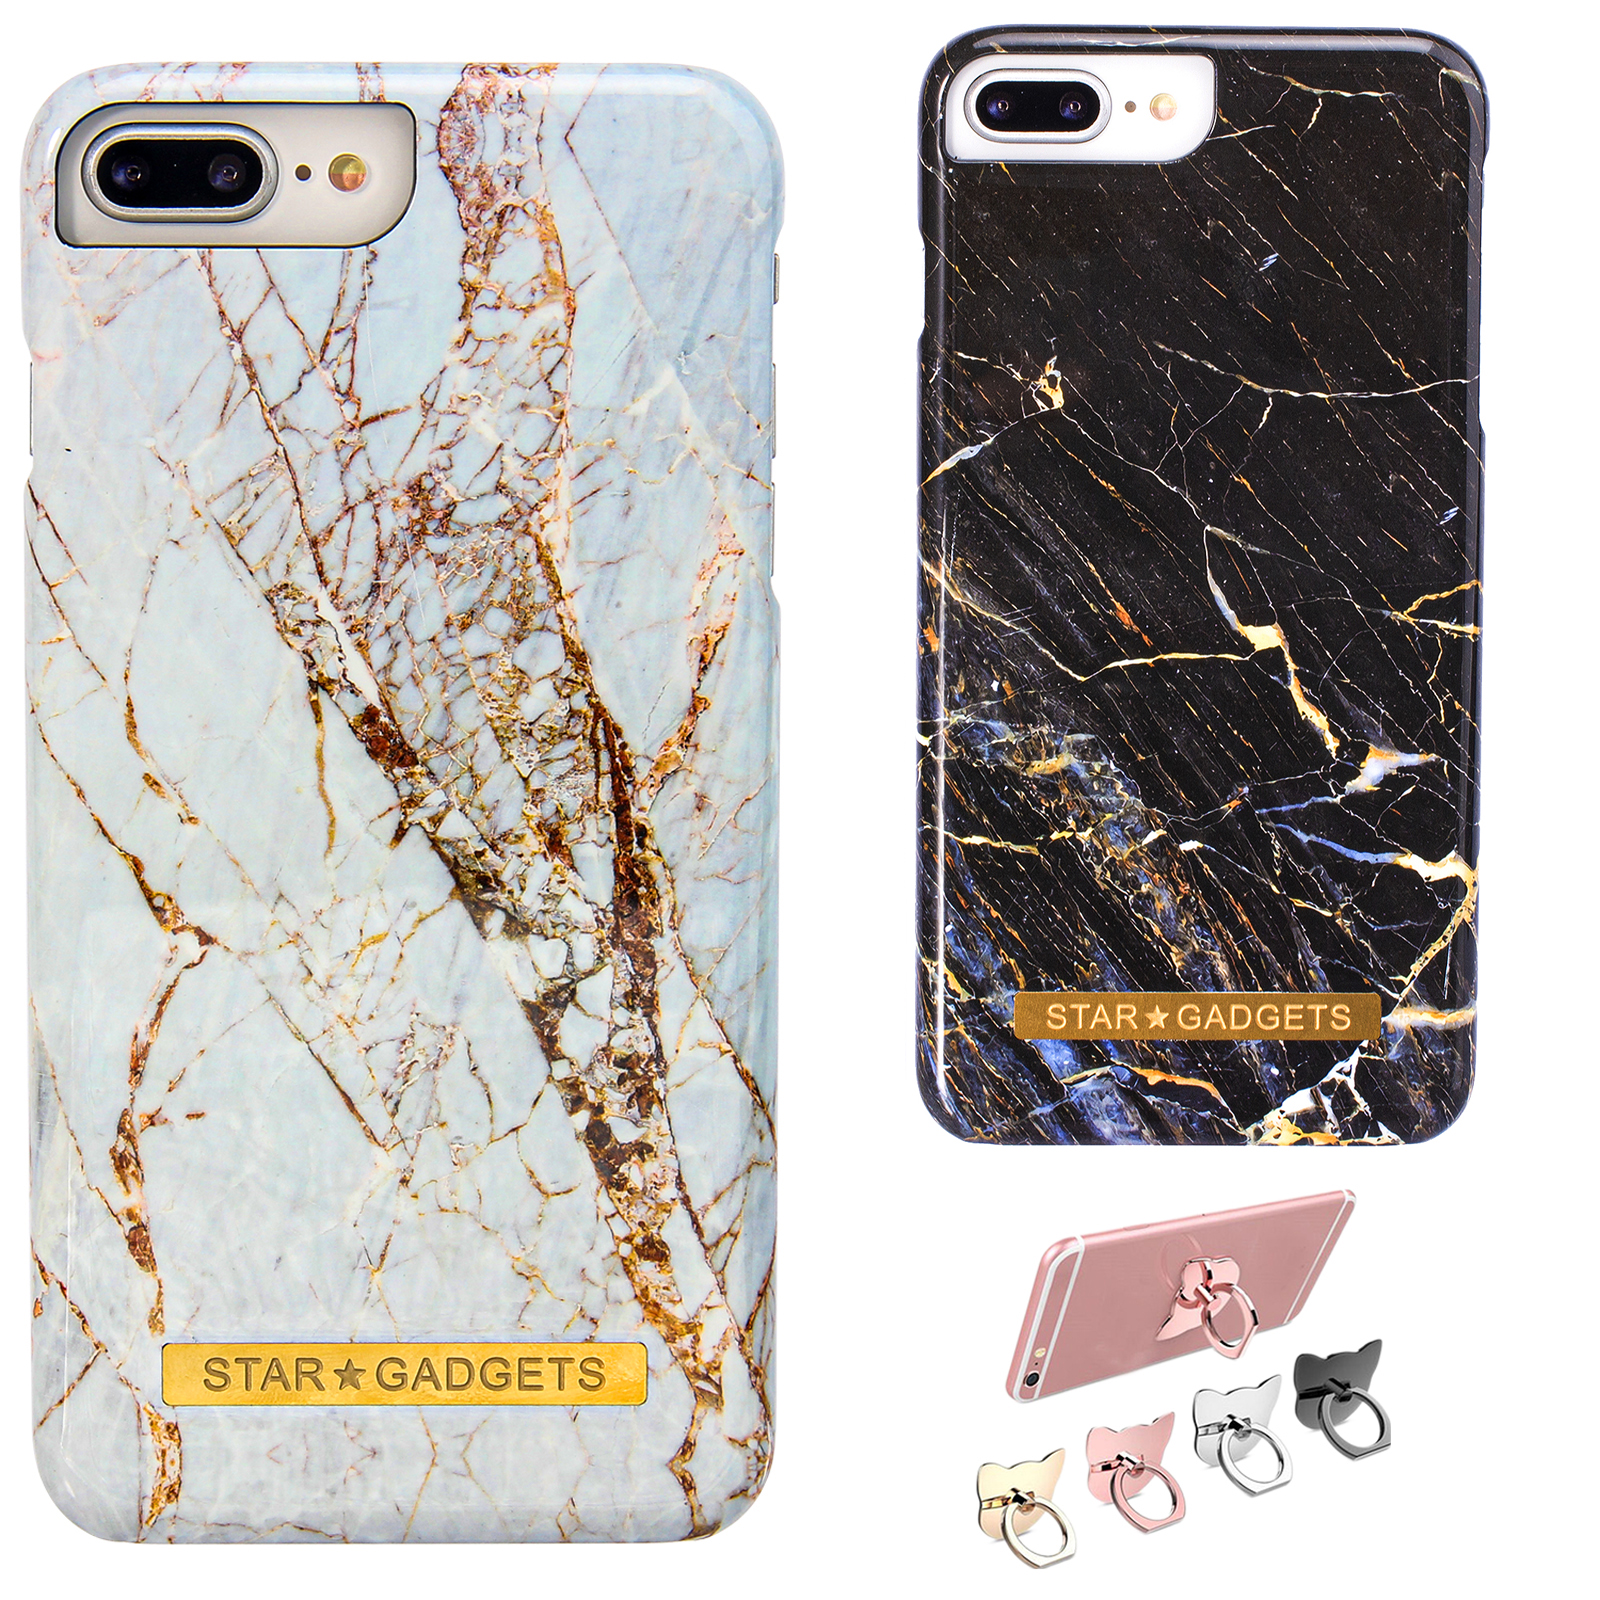 iPhone 7 Plus / 8 Plus - Case Protection Marble